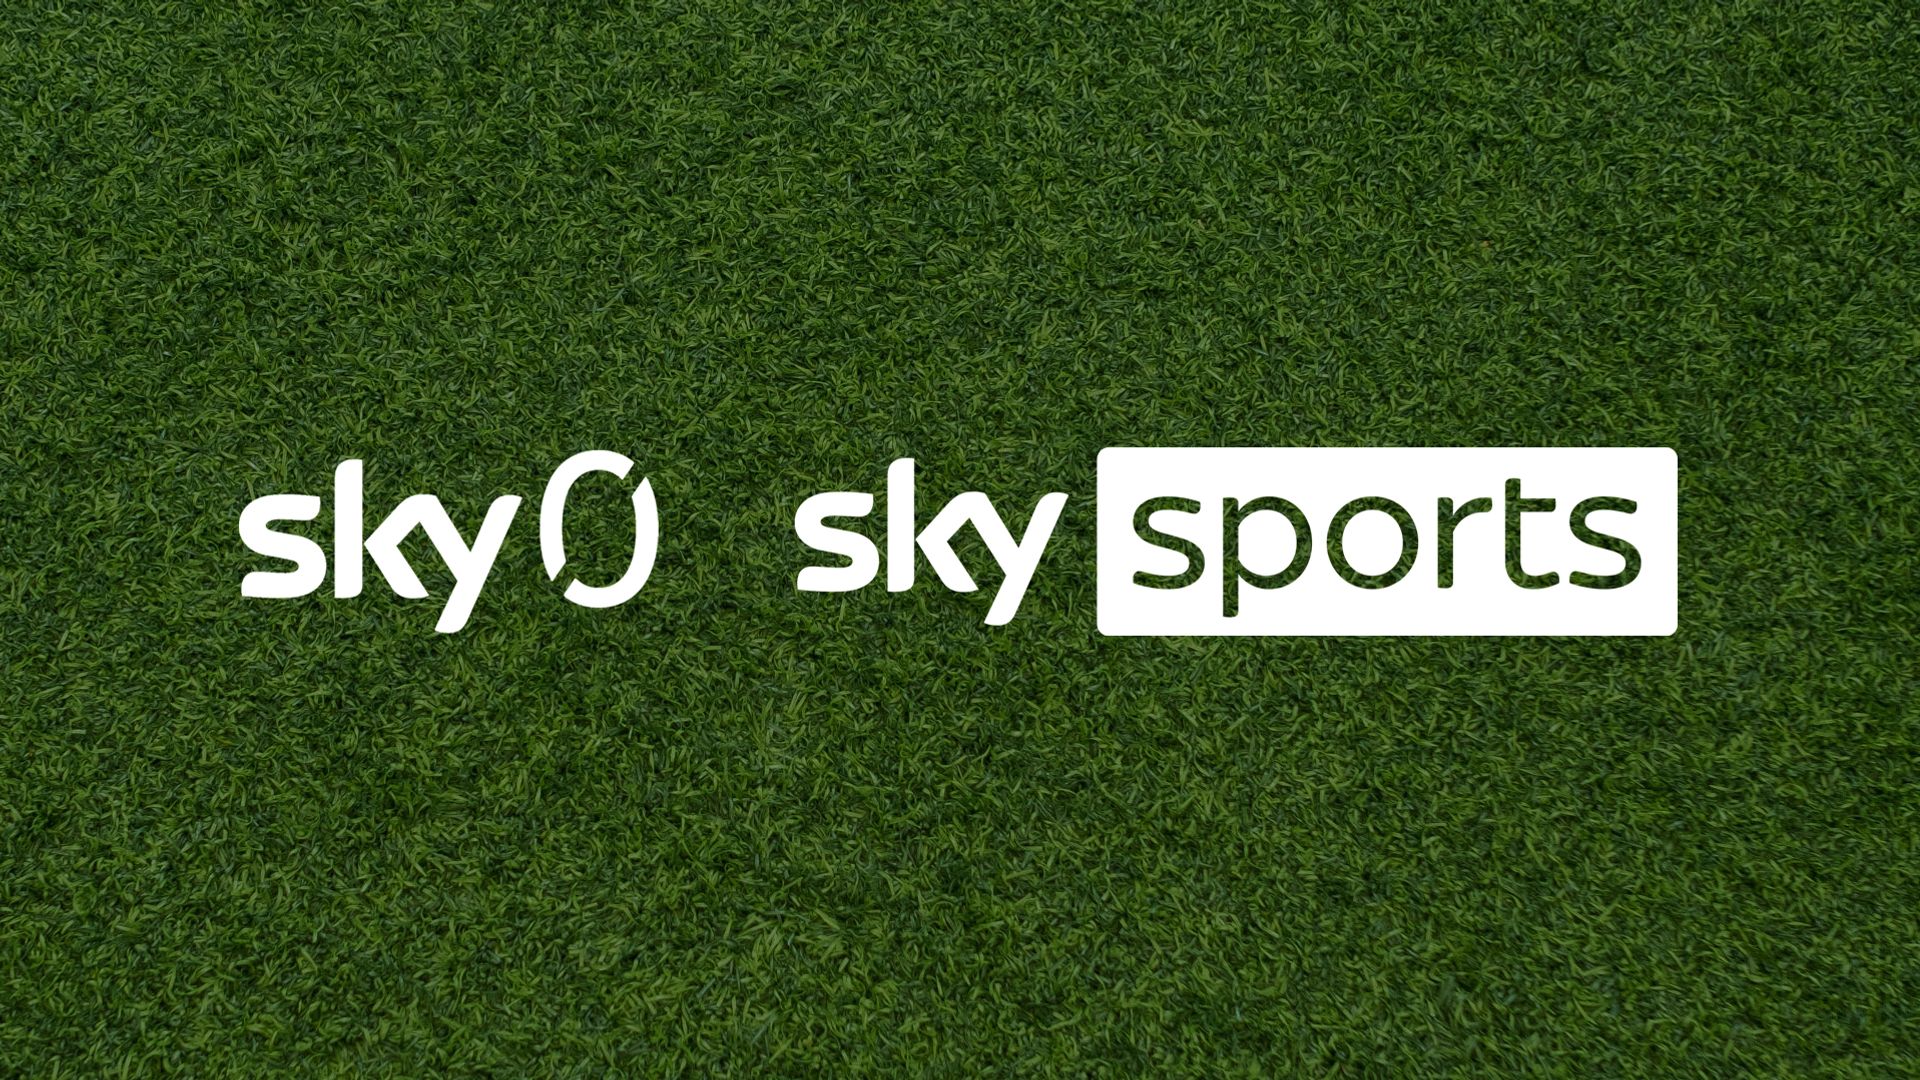 Sky Zero & Sky Sports activities: Let’s take care of the sports activities we loveSkySports | Information